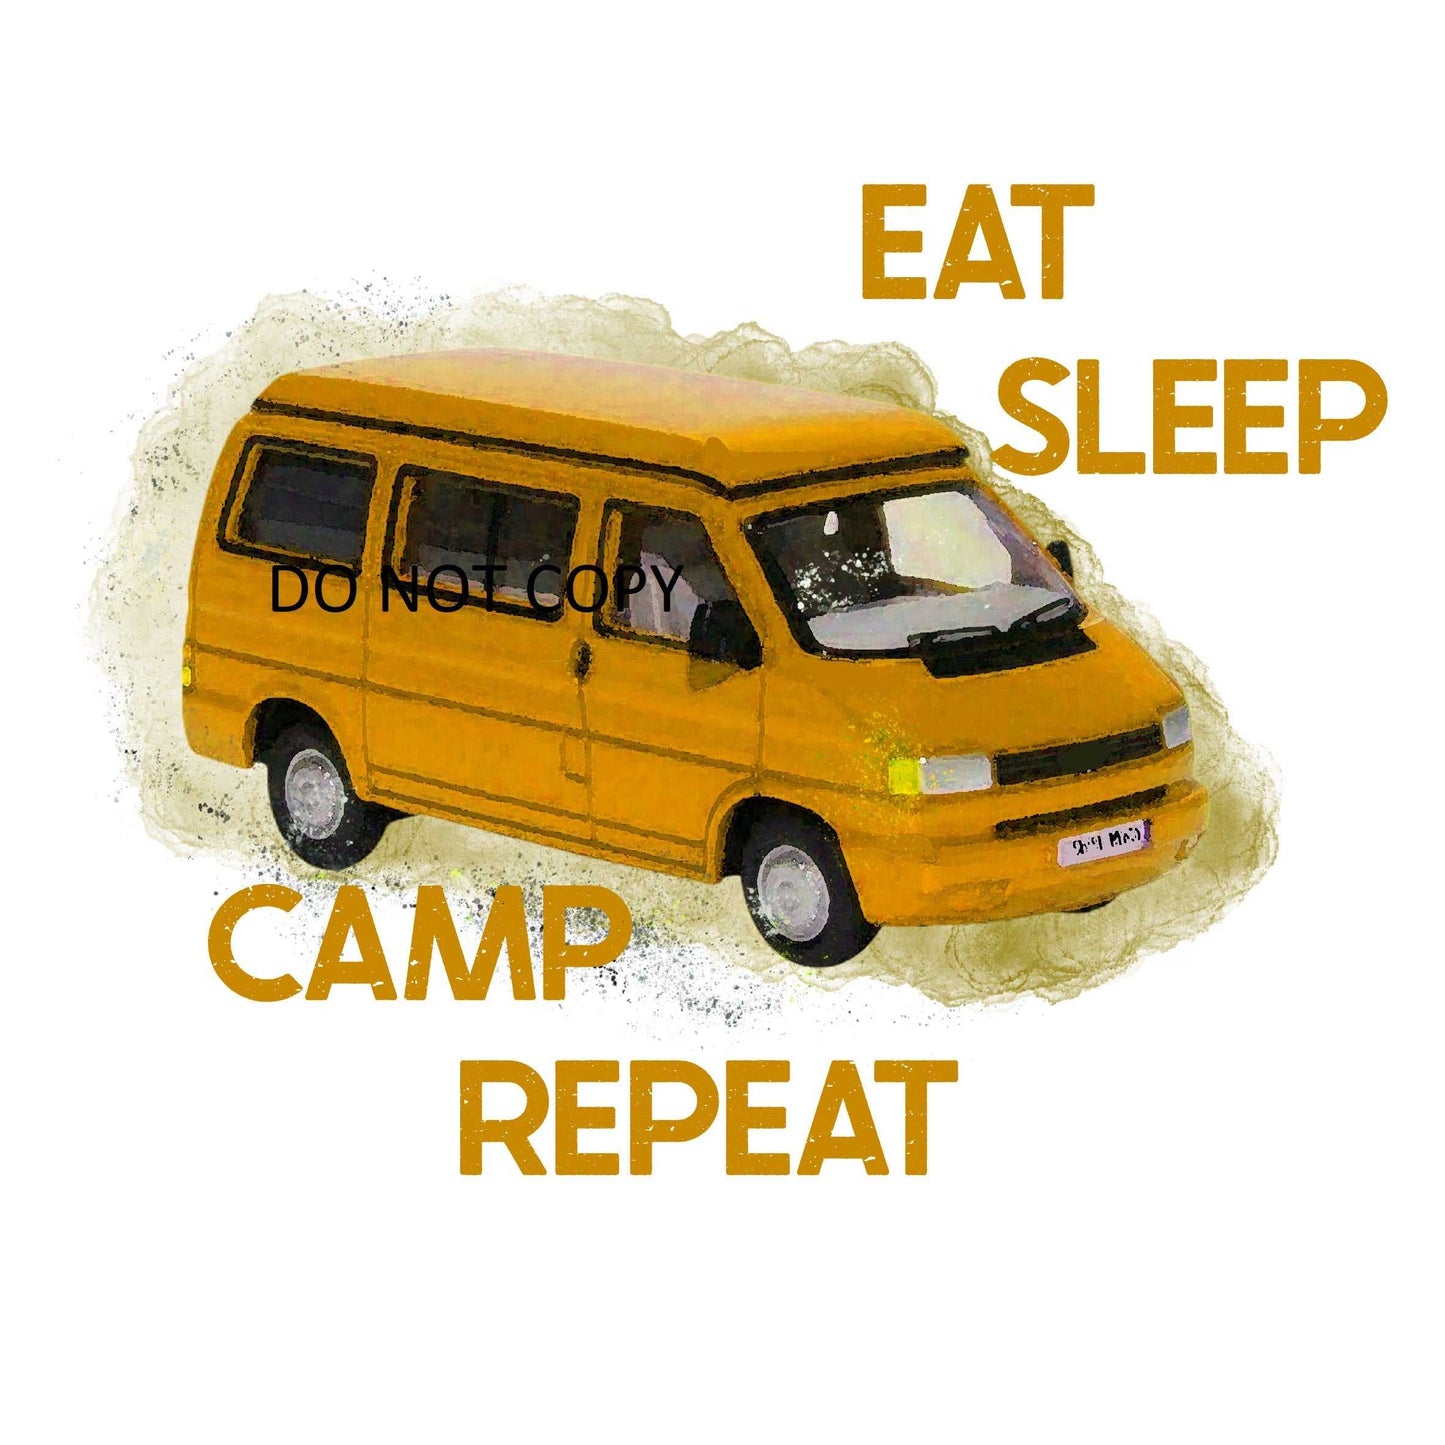  T4 Camper Eat Sleep Camp Repeat Mug by Free Spirit Accessories sold by Free Spirit Accessories